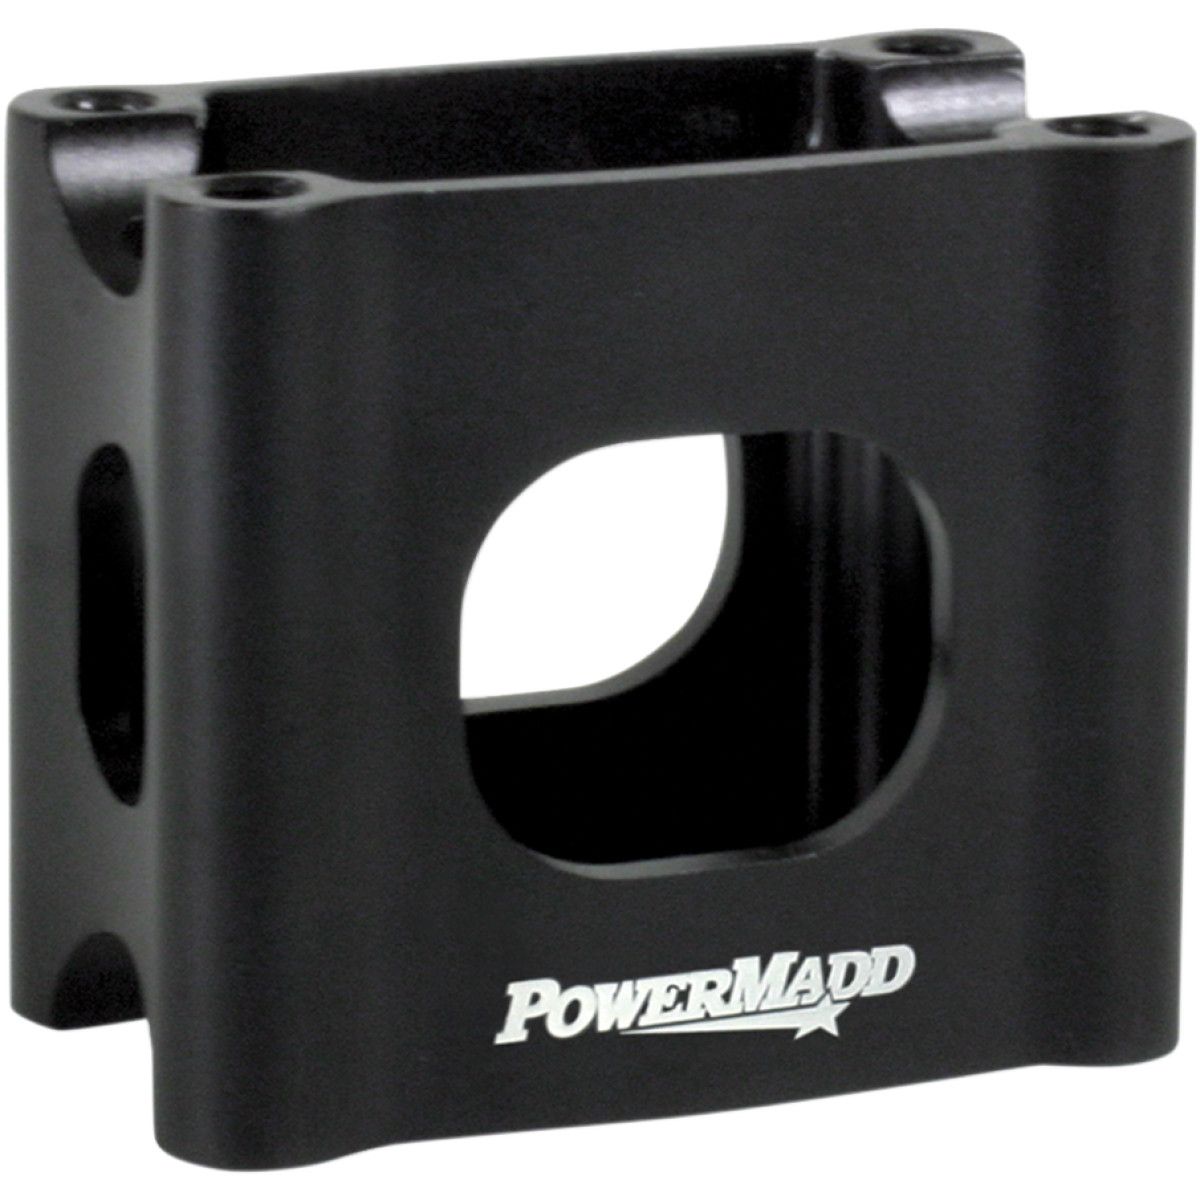 PowerMadd 45474 Black Parts 